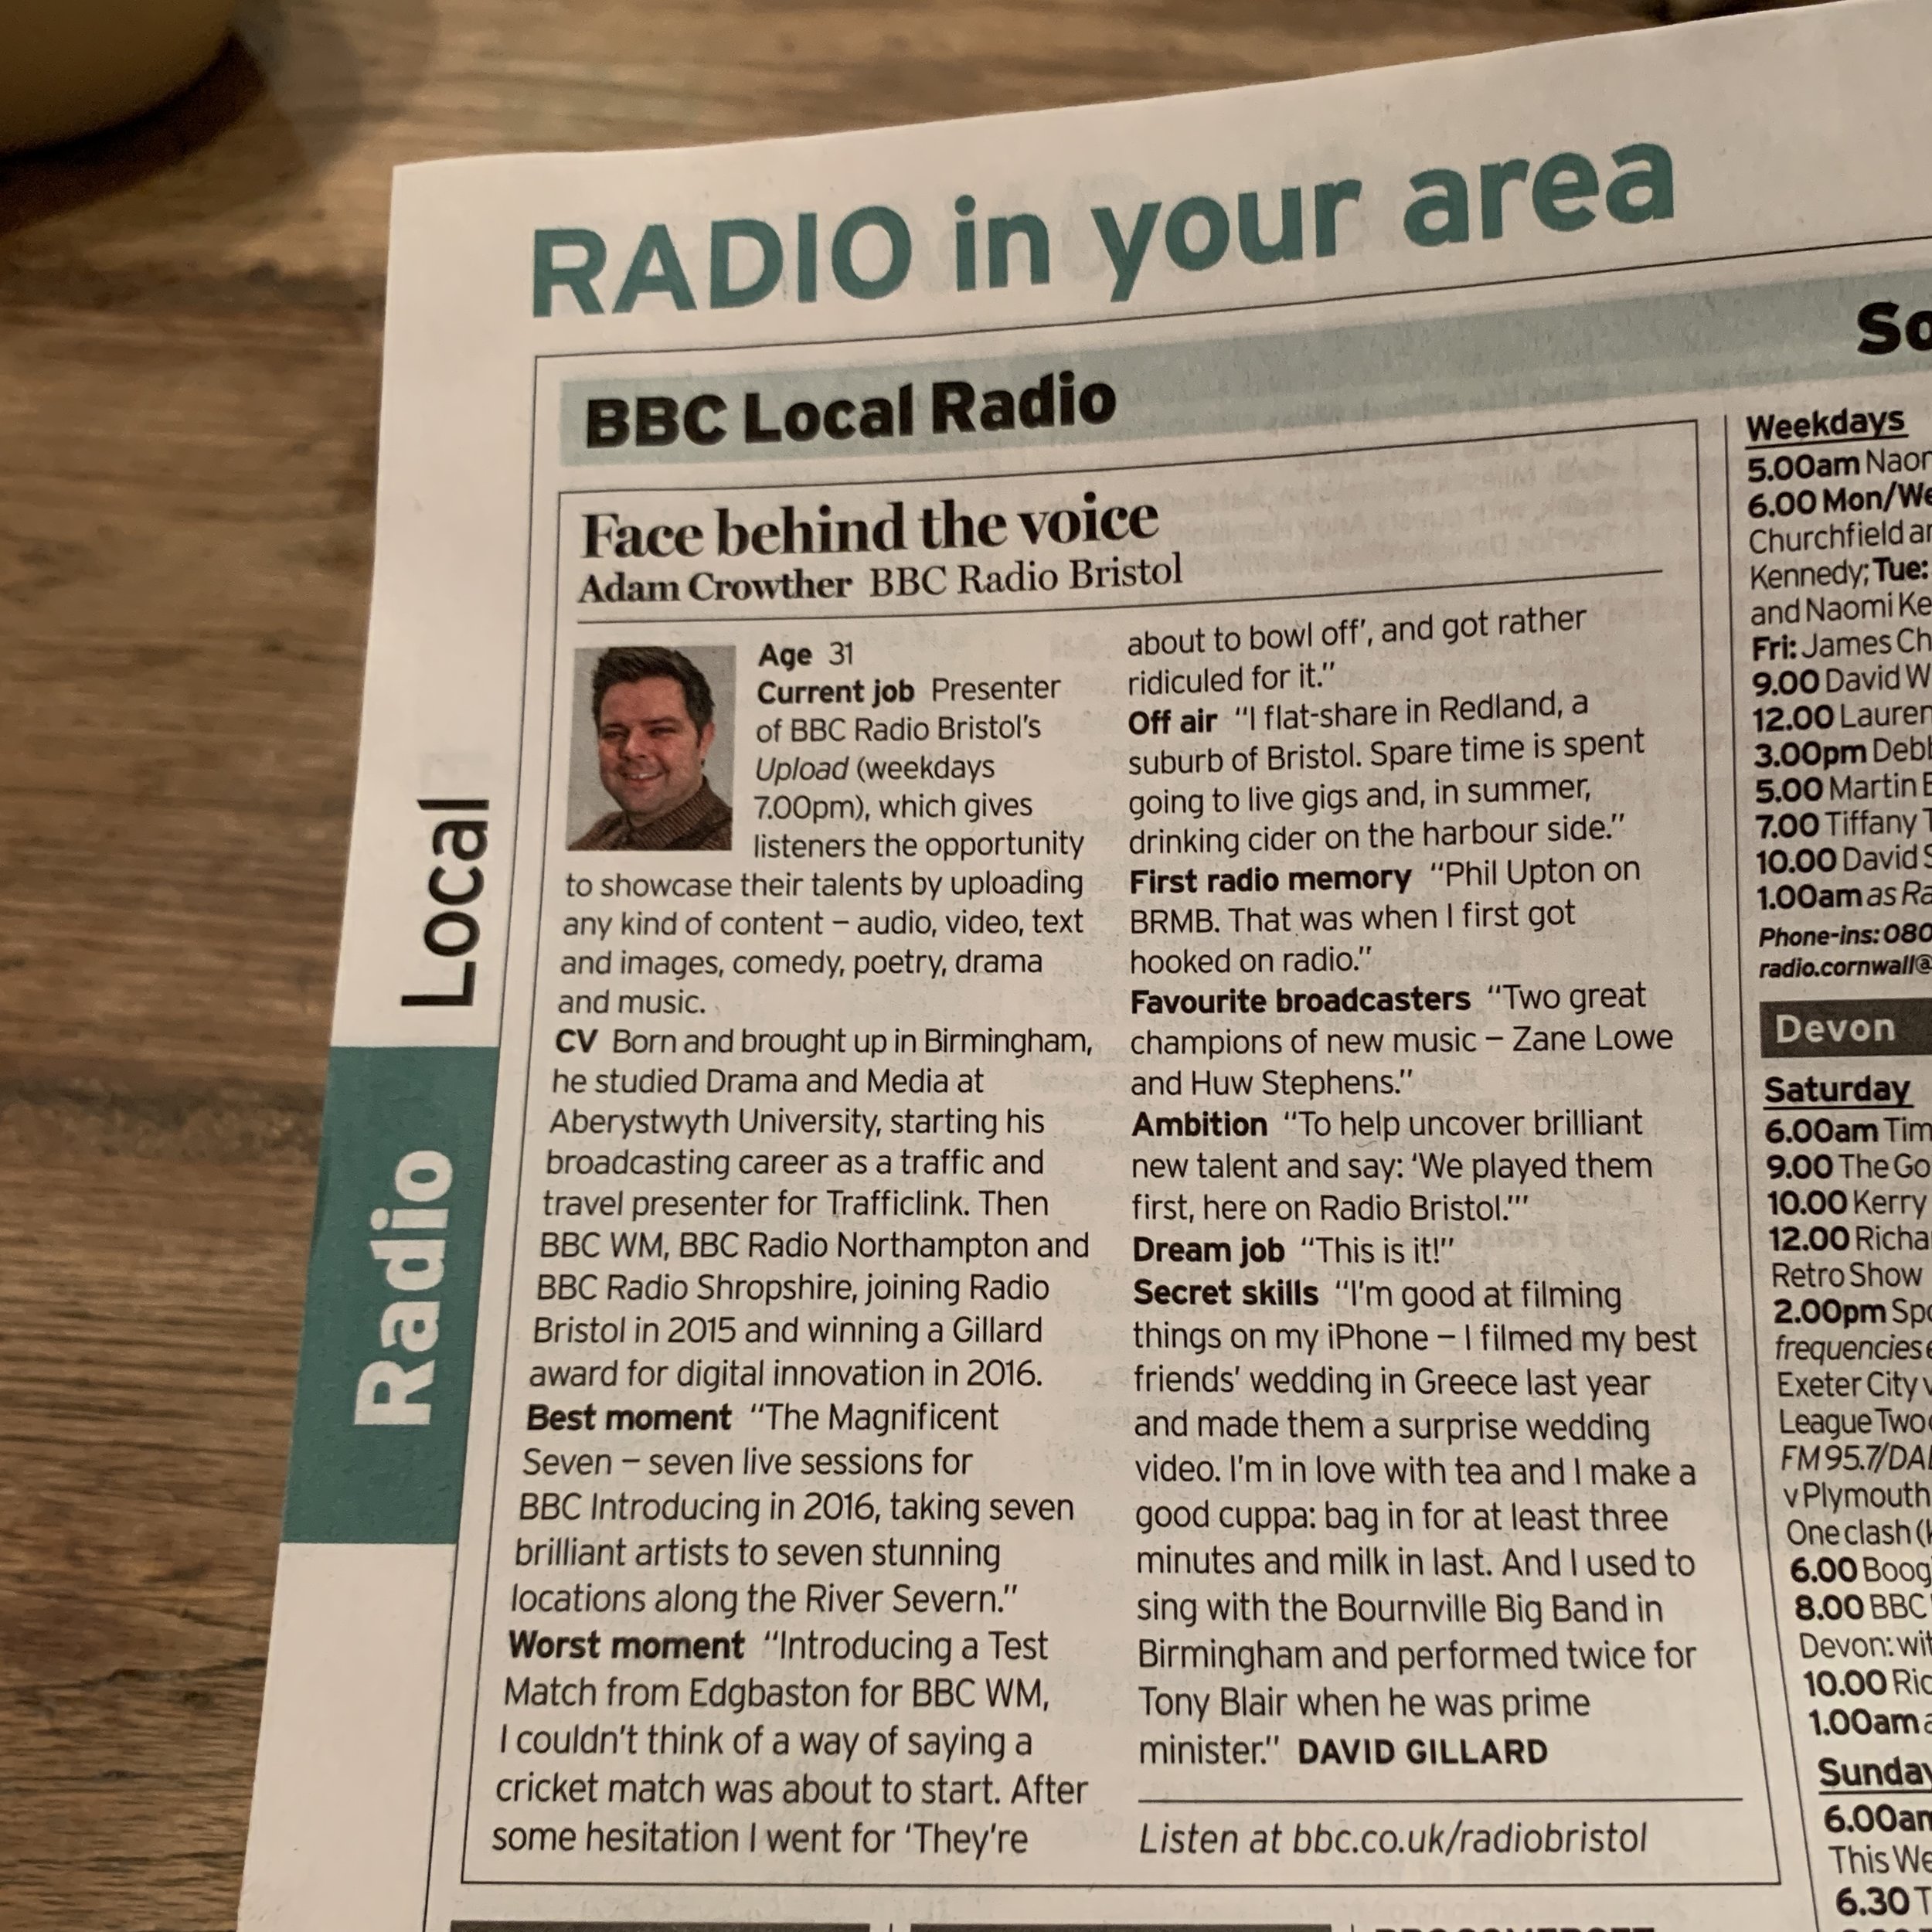 BBC Local Radio - Upload, Clips